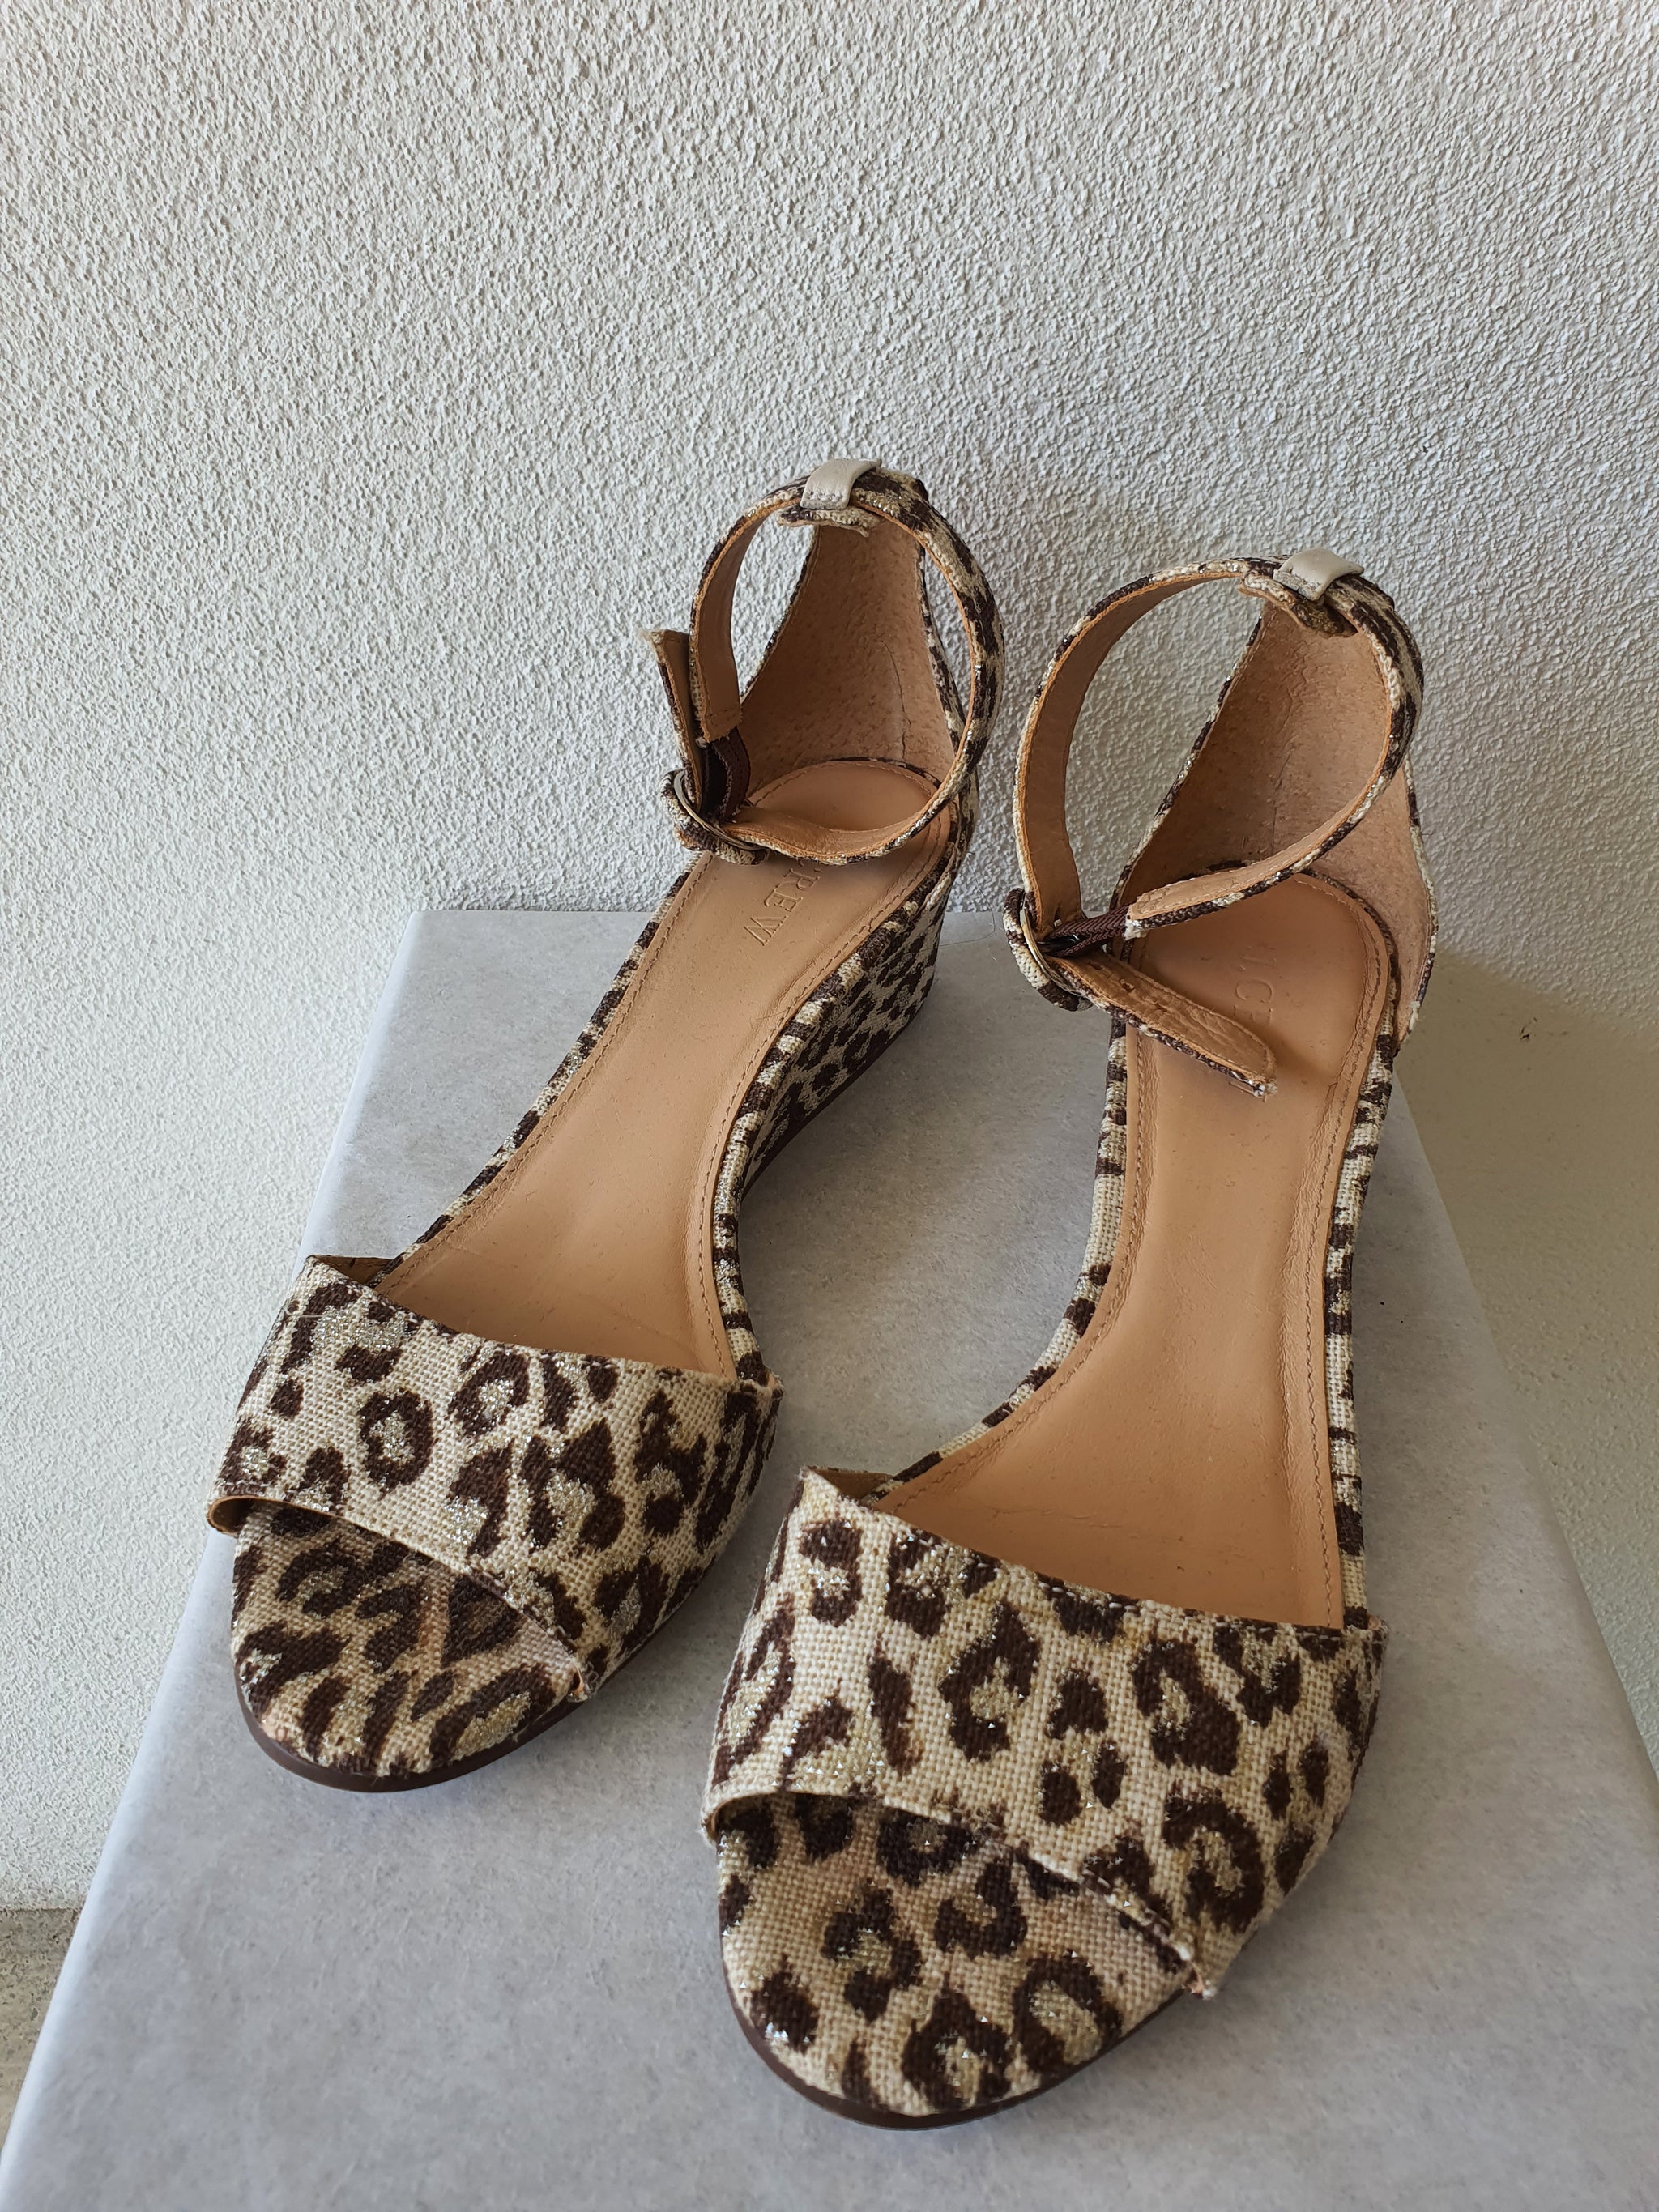 J Crew Leopard print shoes 7.5 - regenerate fashion